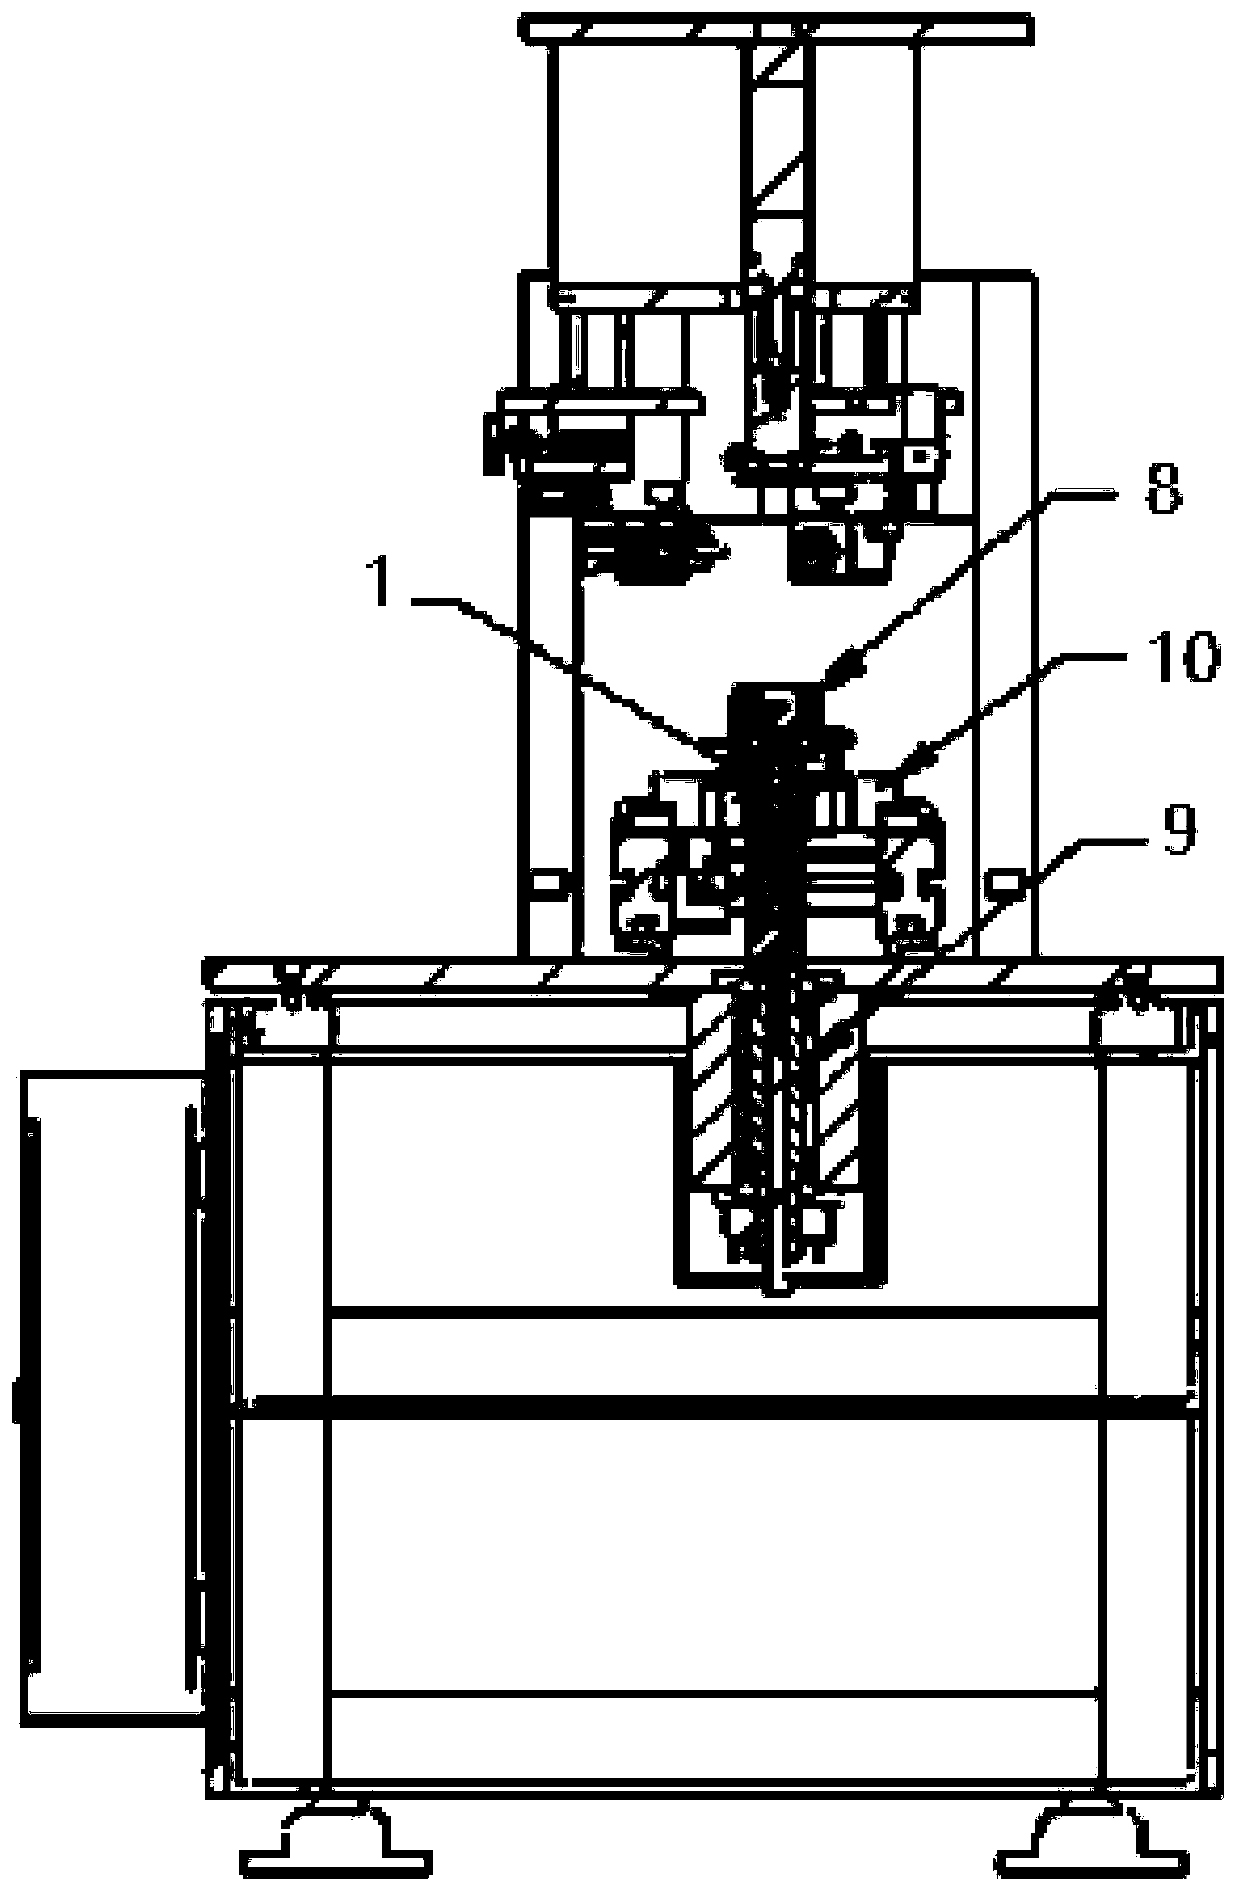 Full-automatic third-generation hub bearing vibration measurement instrument and measurement method